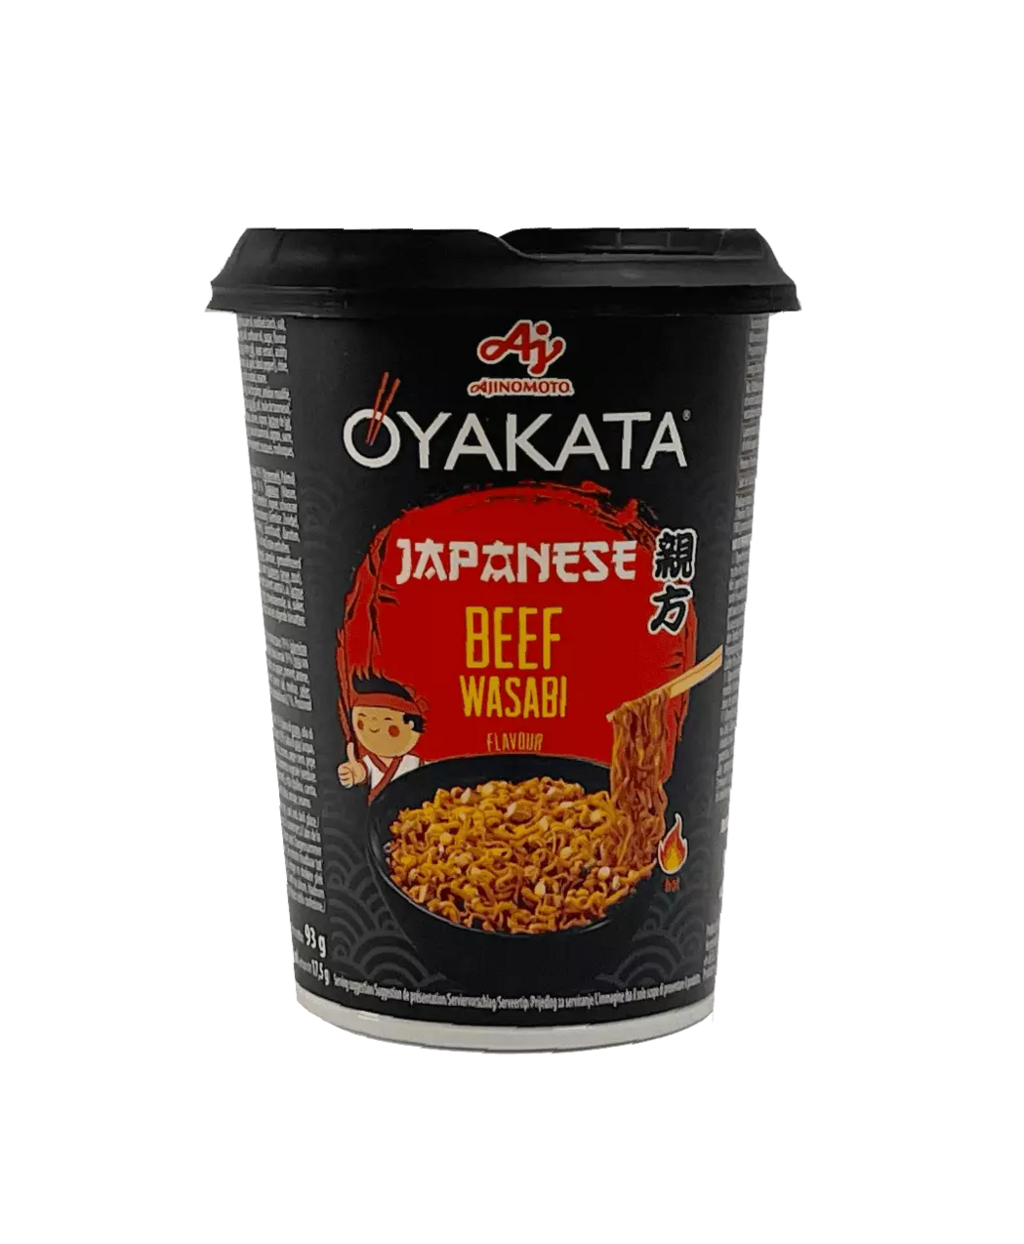 Instant Noodles Cup Beef Wasabi 93g Ajinomoto Oyakata Japan